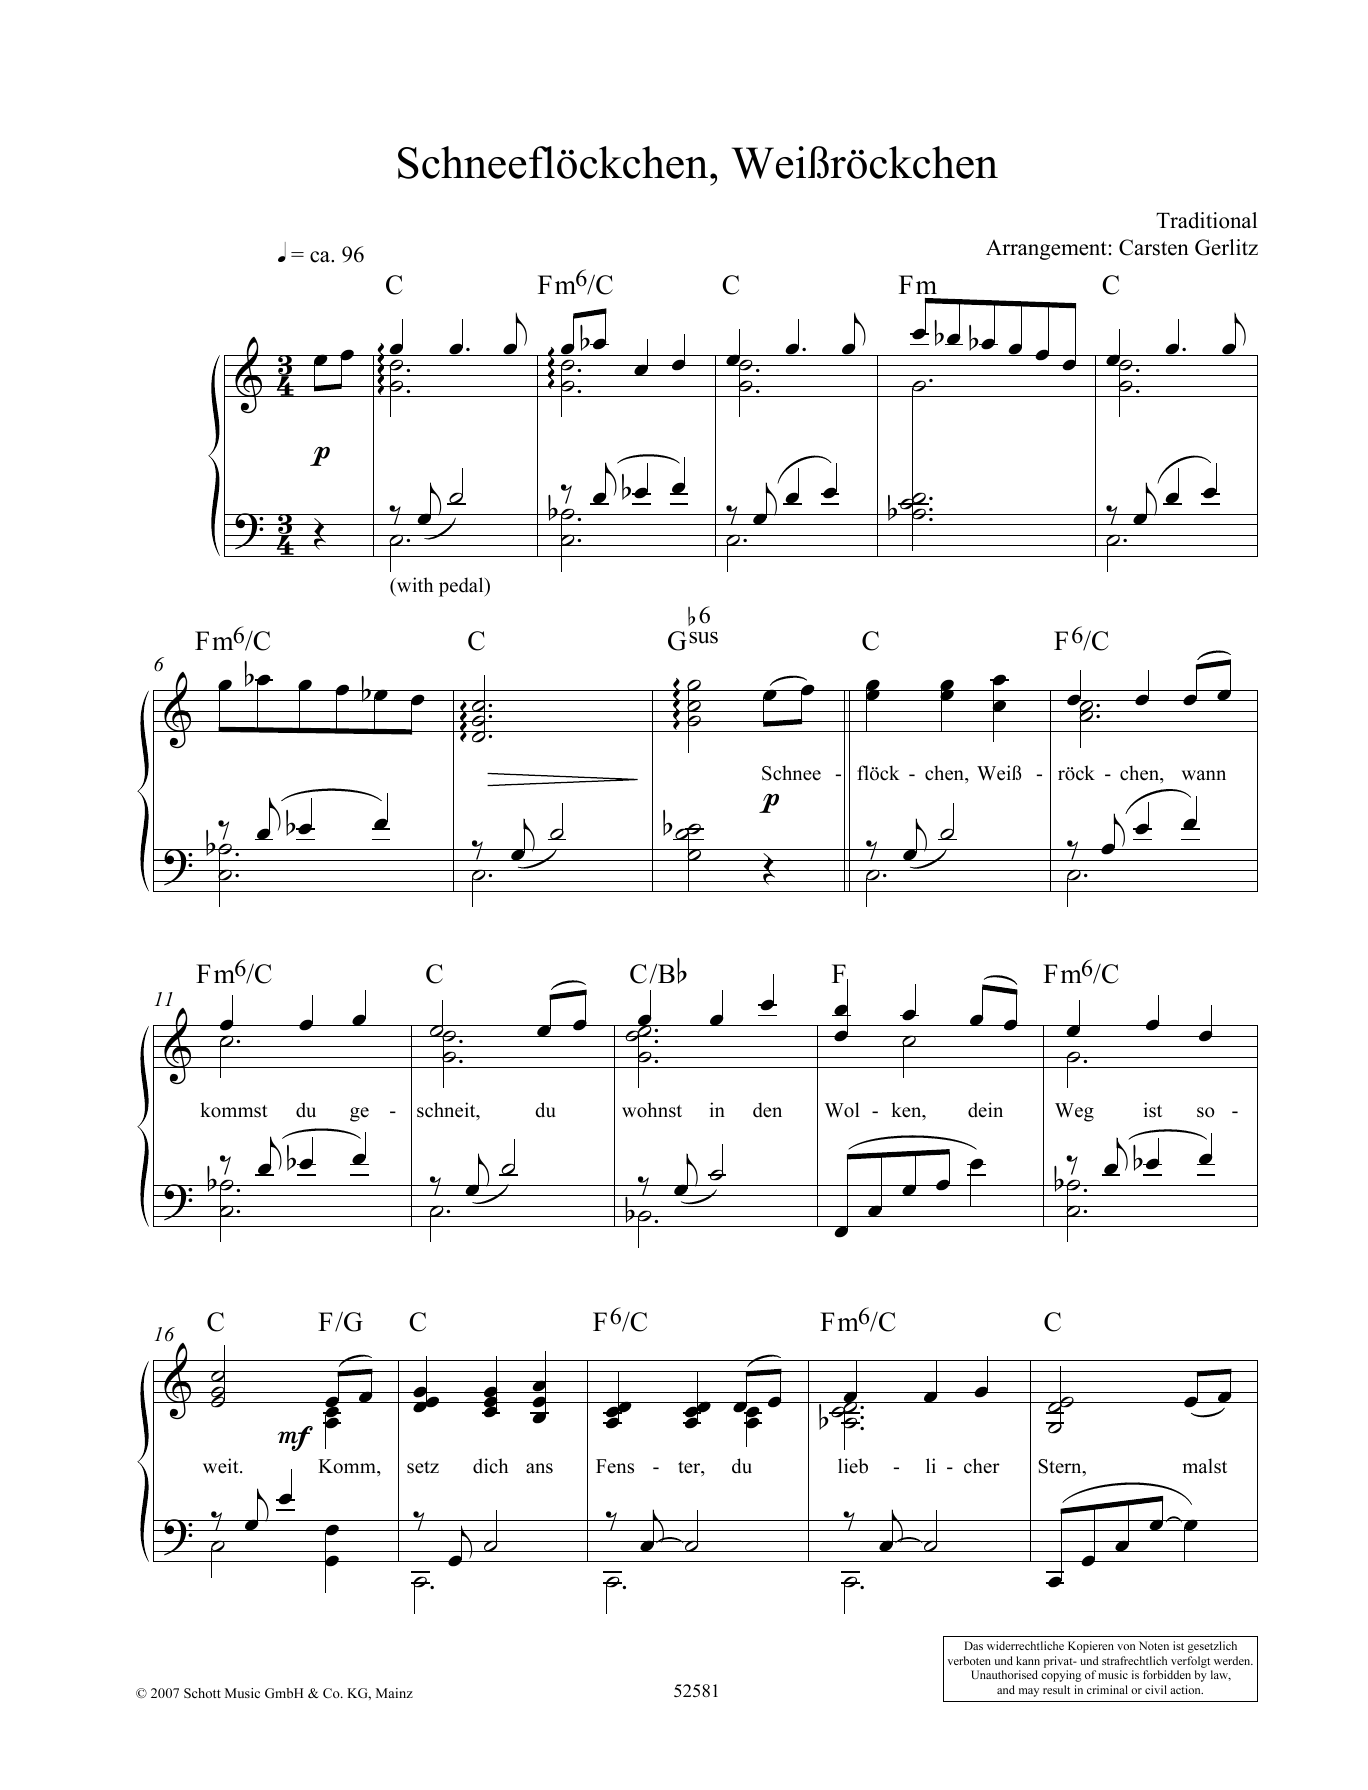 Carsten Gerlitz Schneeflöckchen, Wei??röckchen Sheet Music Notes & Chords for Piano Solo - Download or Print PDF